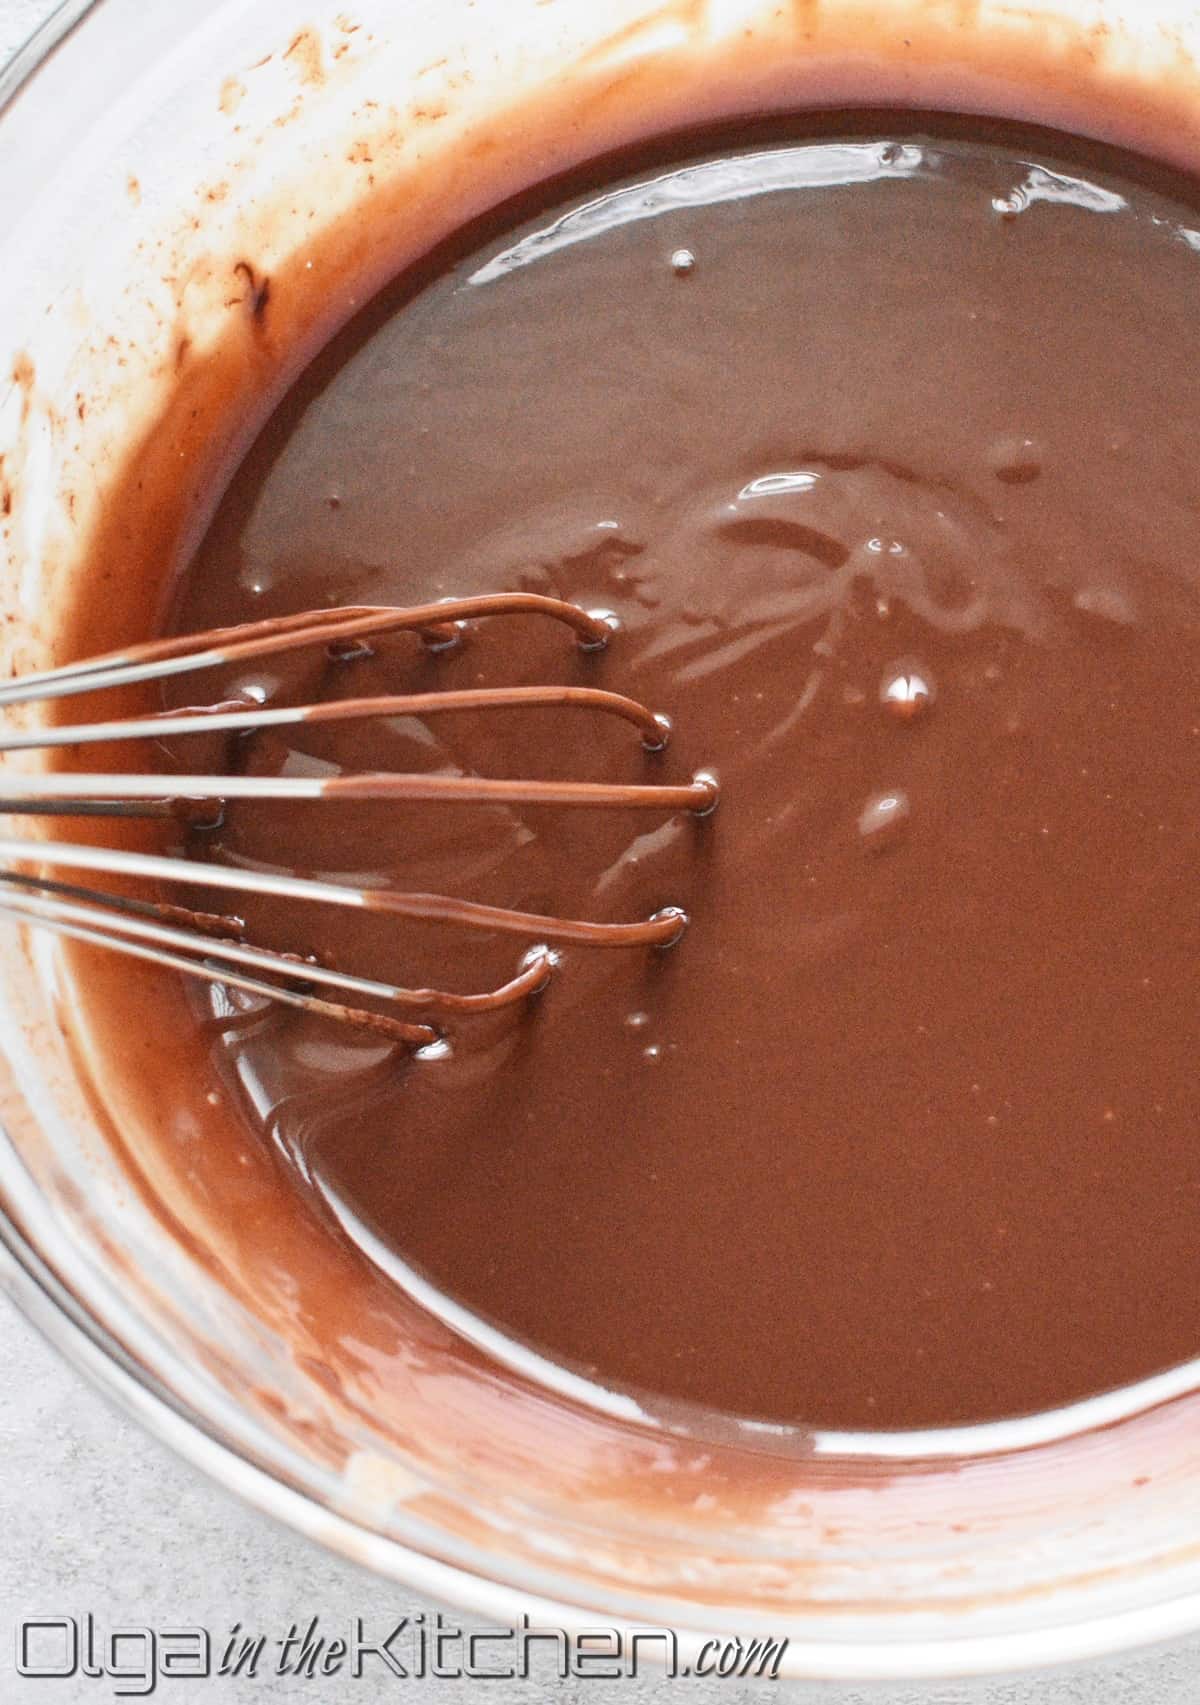 Chocolate Cherry Bundt Cake: moist, filled with Ukrainian buttercream and cherries, topped with chocolate ganache for extra flavor. #cake #chocolatecake #chocolate #bundtcake #drunkencherry #olgainthekitchen #dessert